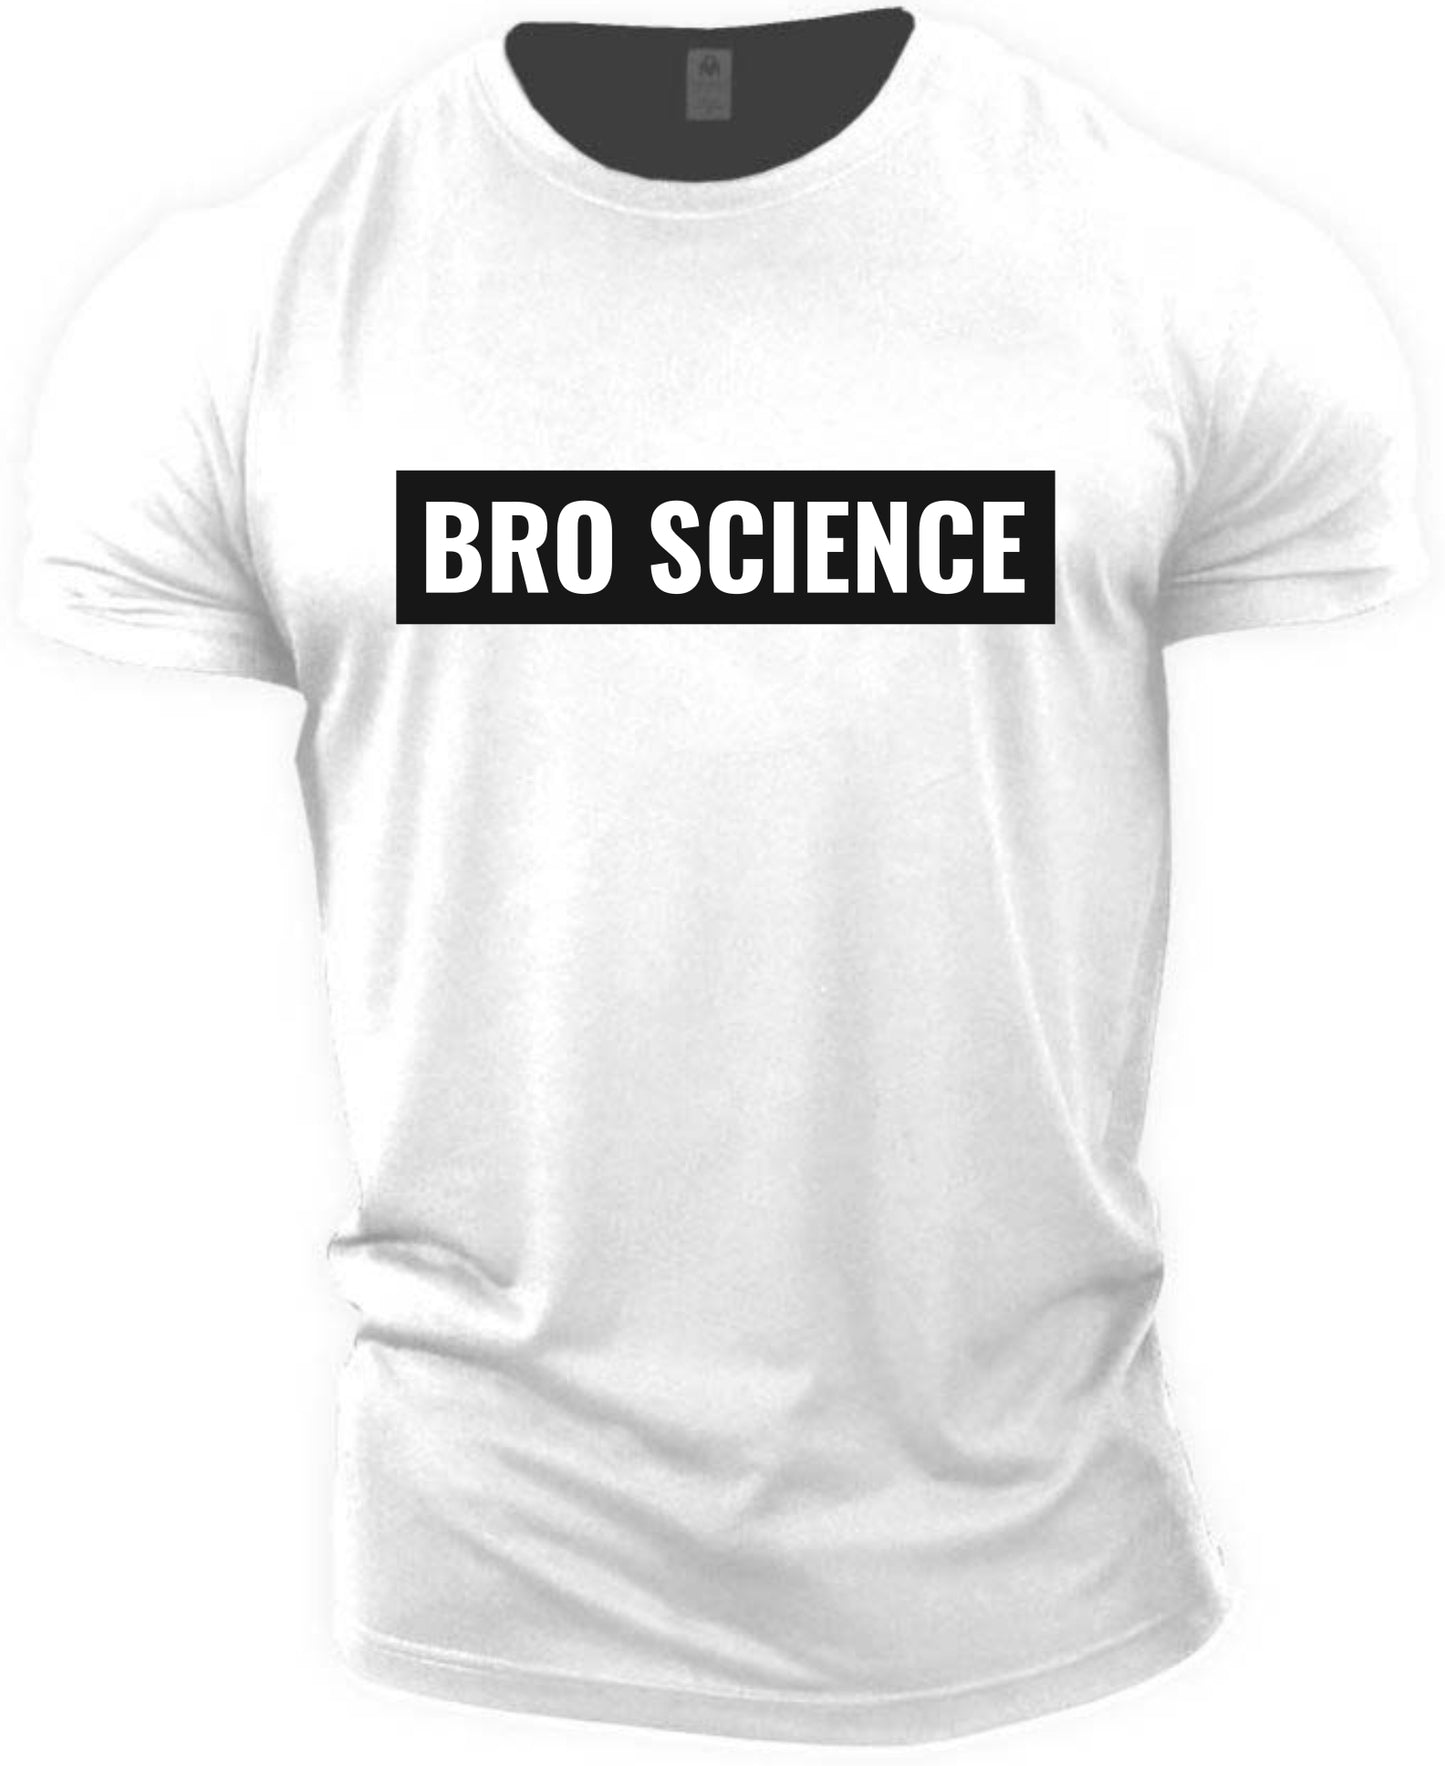 BRO SCIENCE T-shirt